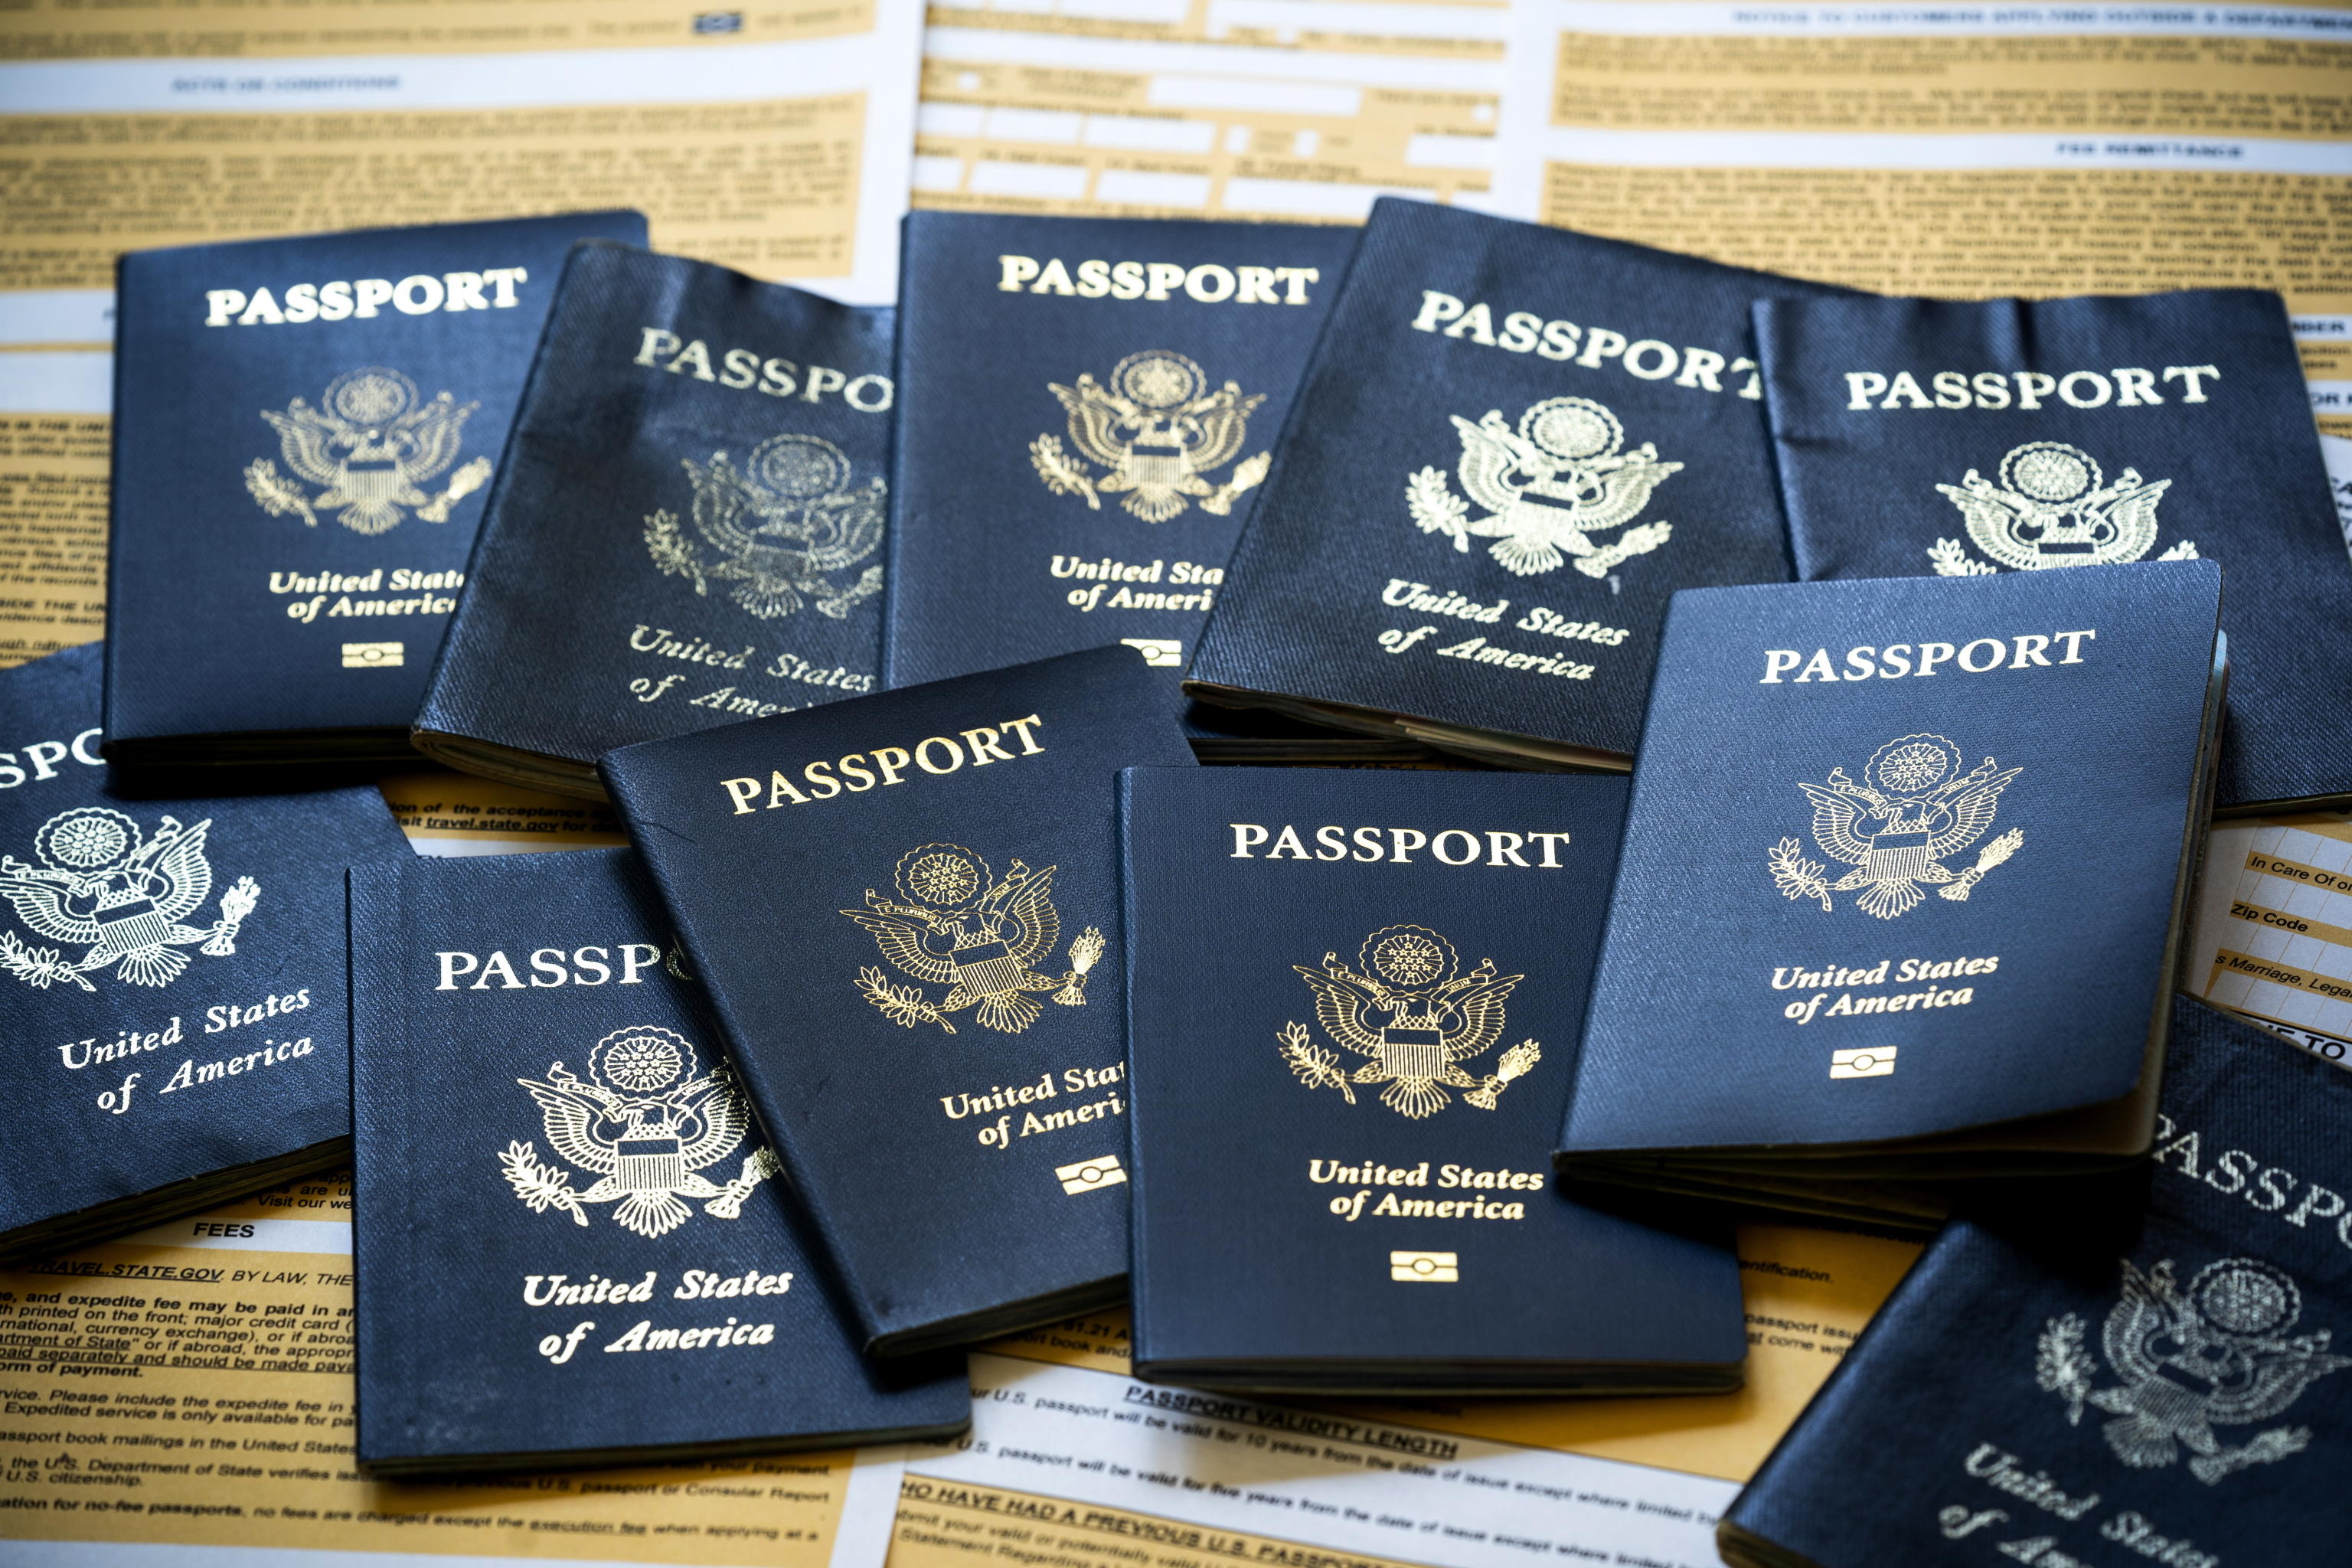 Passport issued. Who Issues Passport.